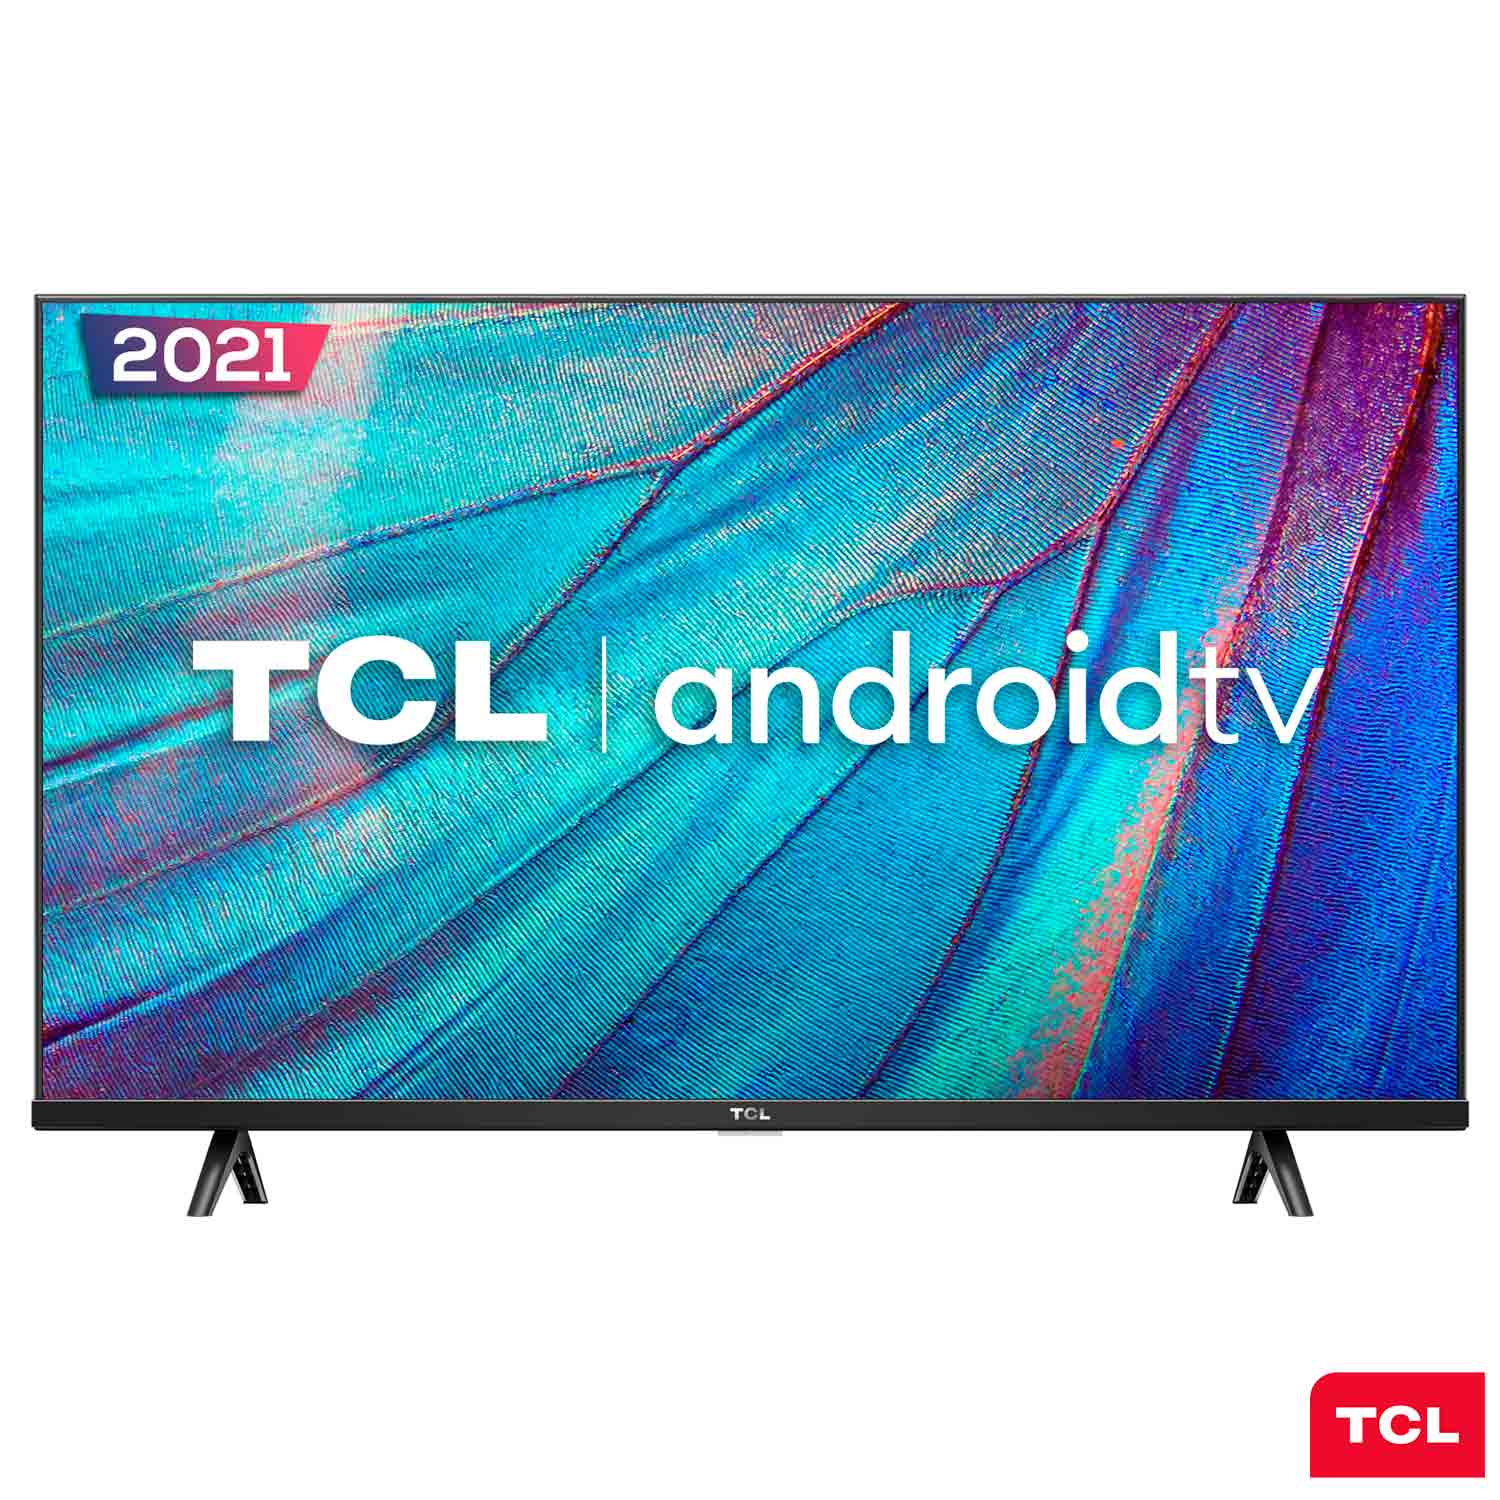 Smart TV TCL LED HD 32" Android TV com Google Assistant e Borda Slim e Wi-Fi - 32S615